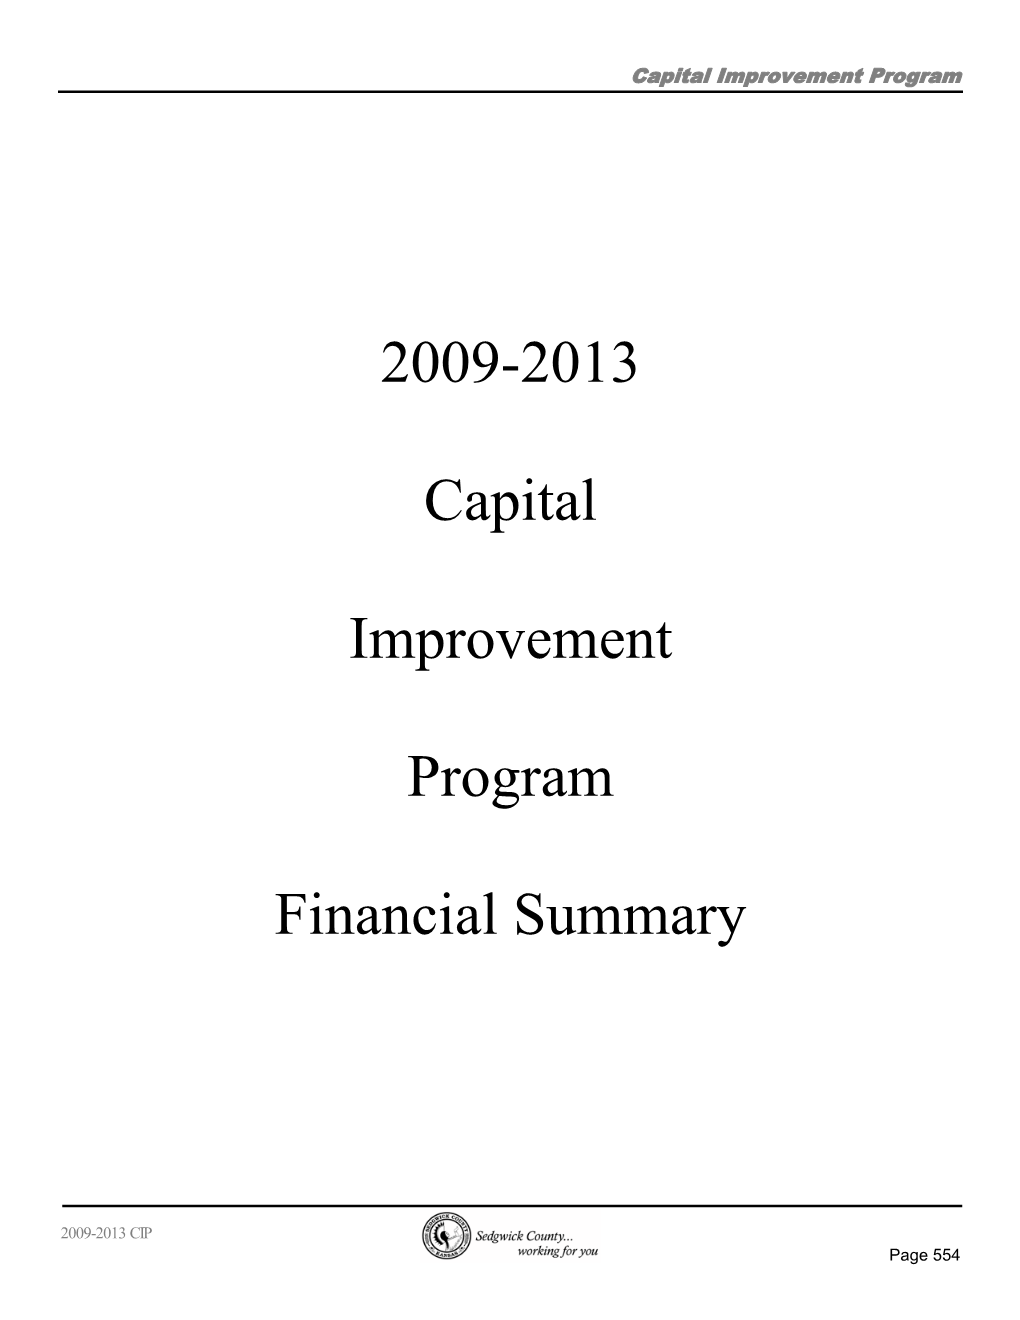 2009-2013 Capital Improvement Program Financial Summary